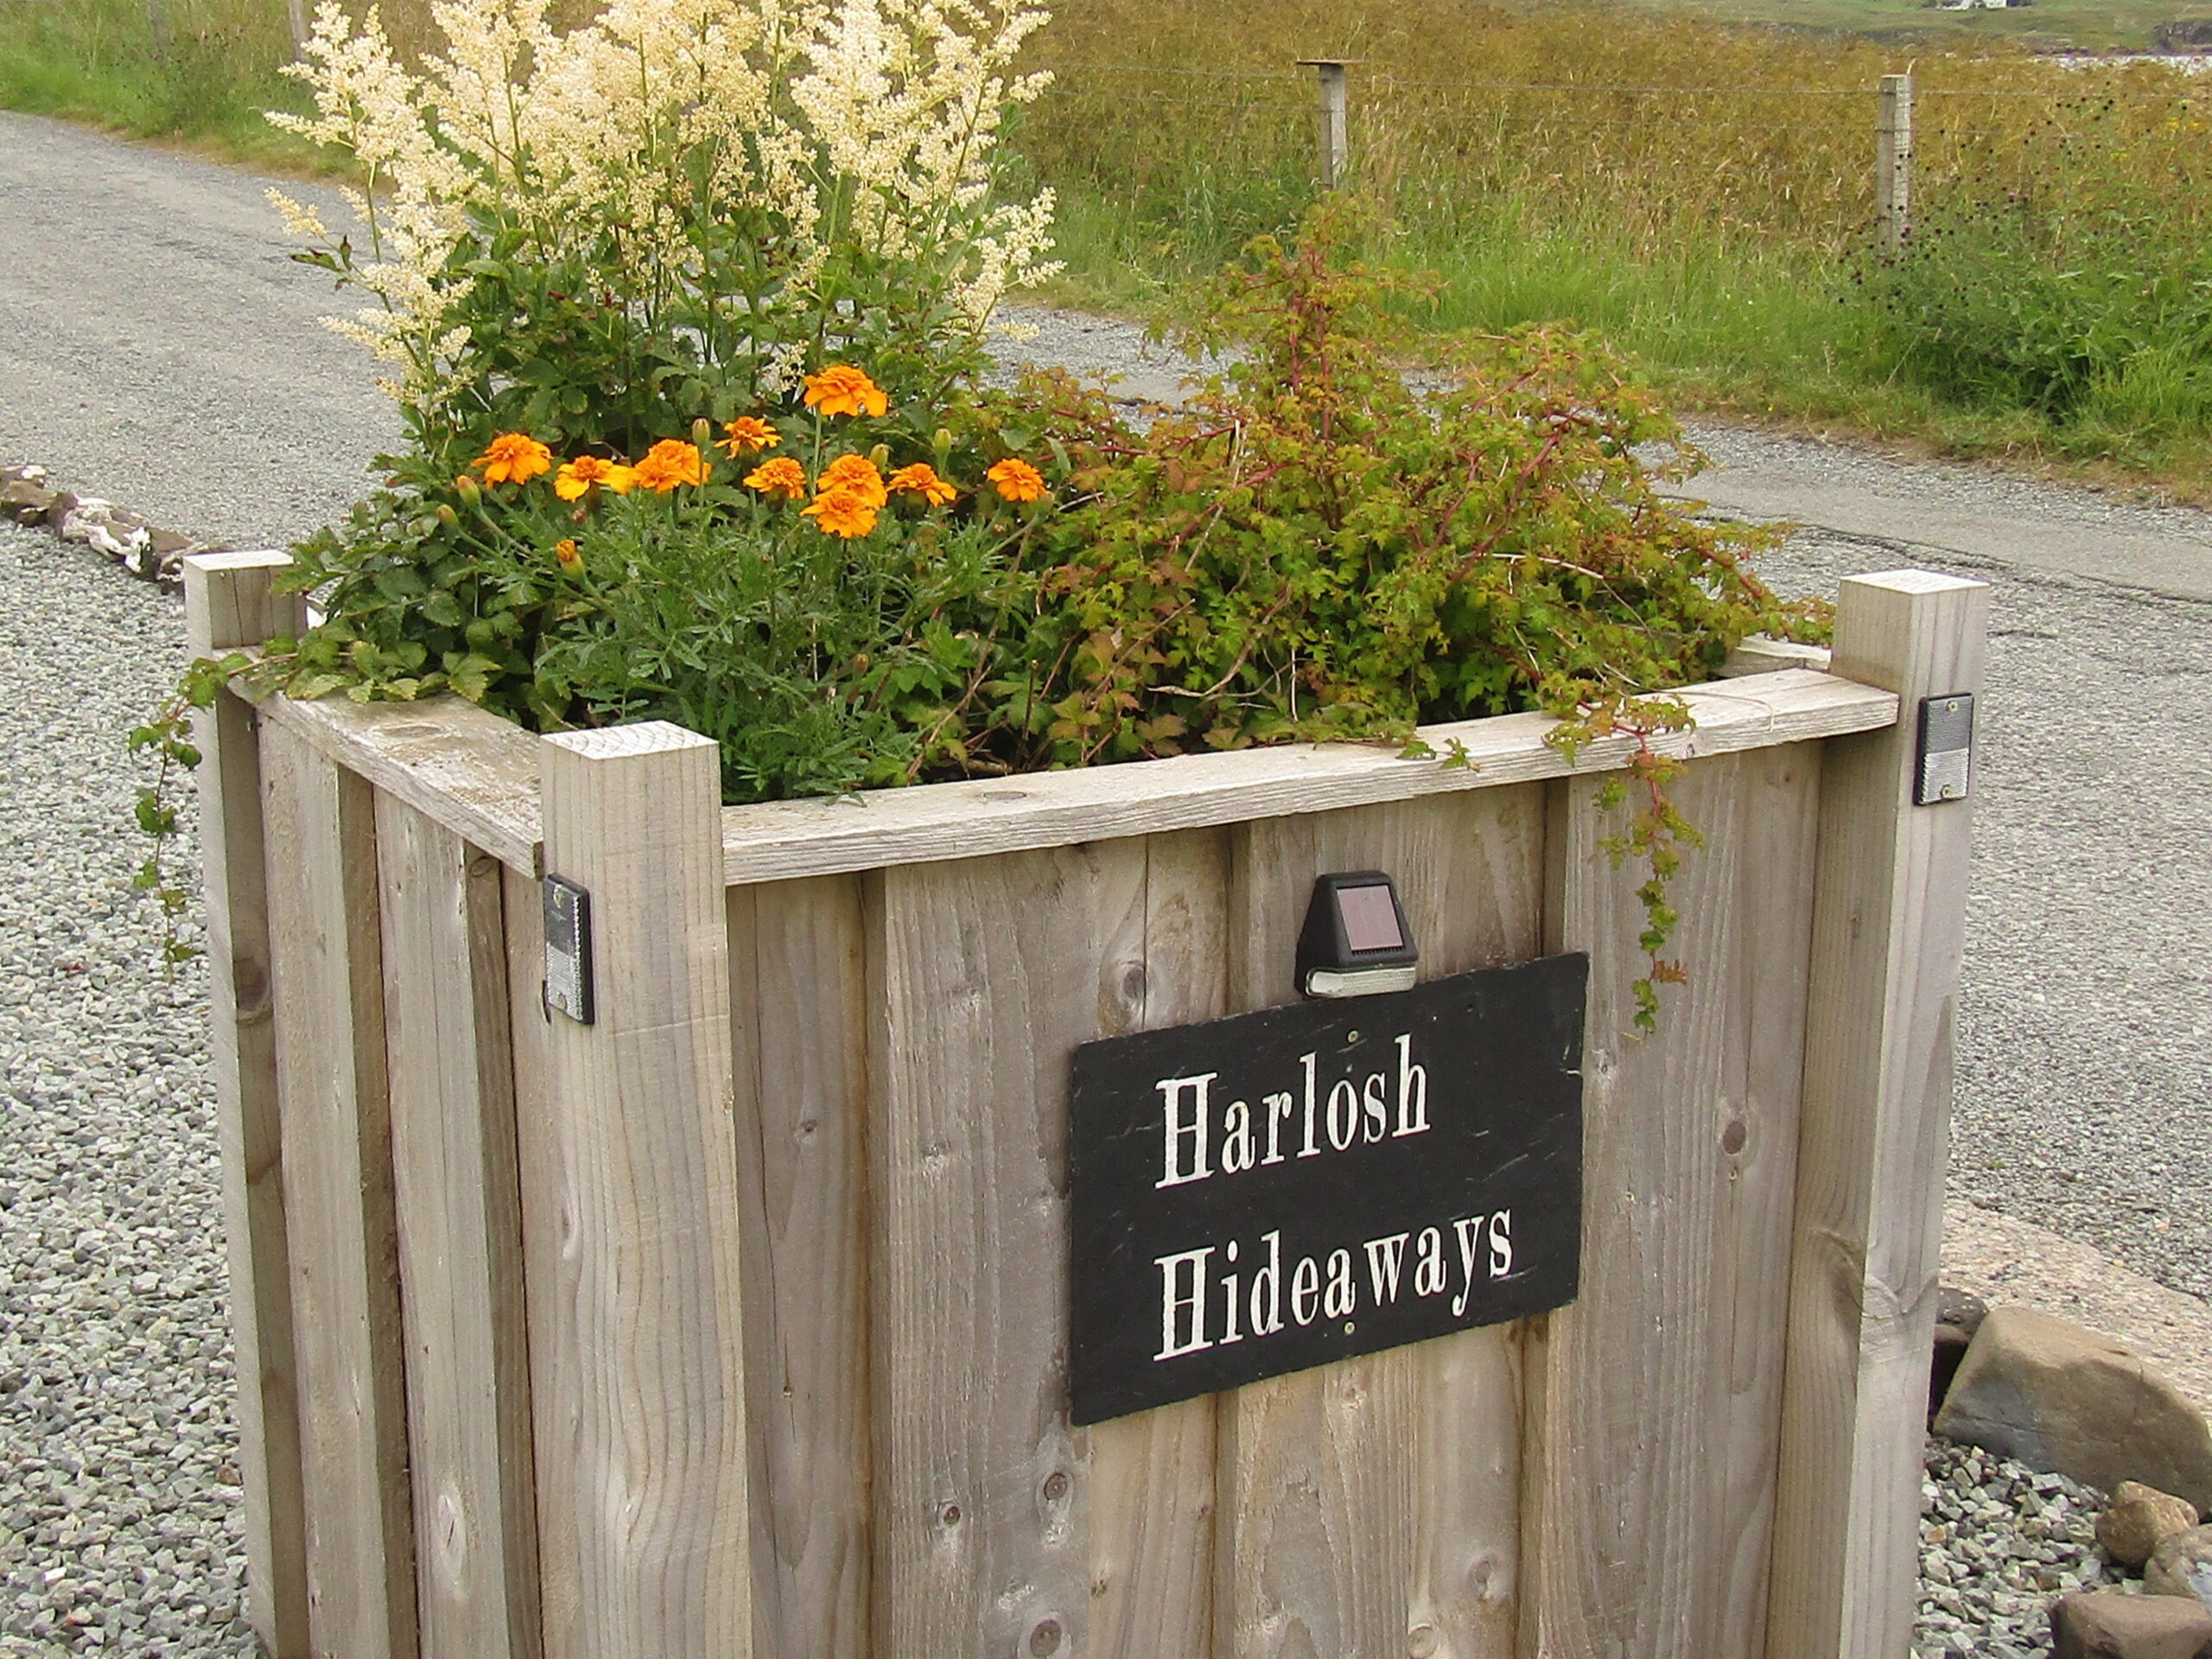 Harlosh Hideaways sign